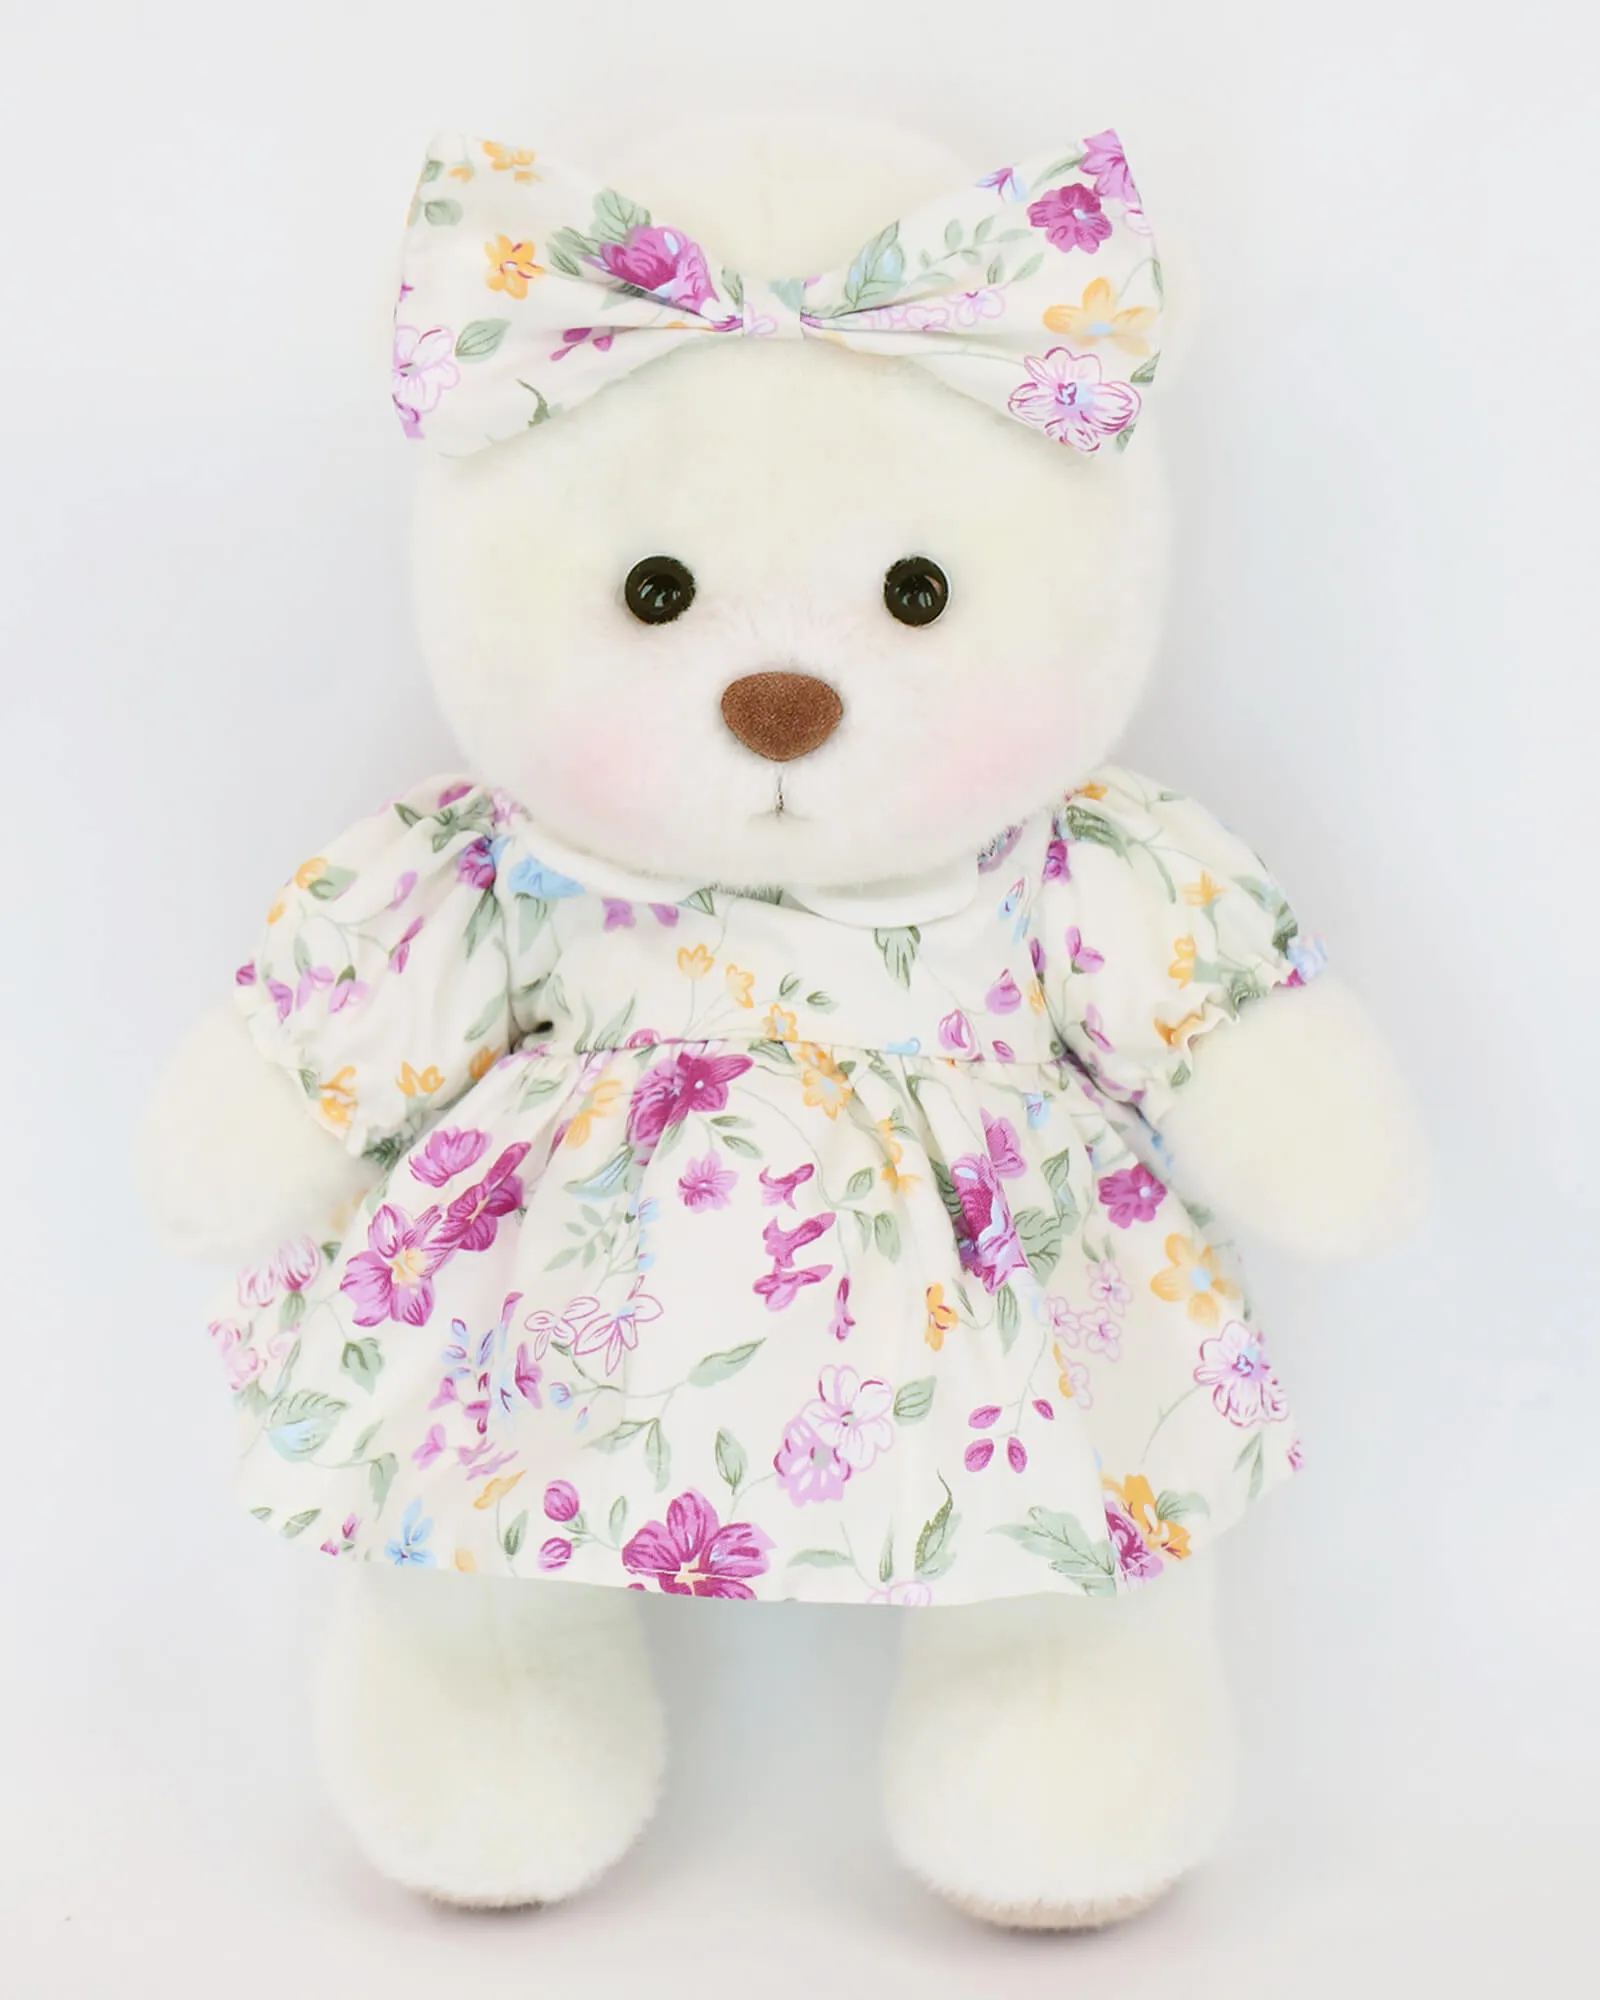 Floral Round Collar Dress Bear | Handmade Jointed Teddy Bear Gift-Getahug